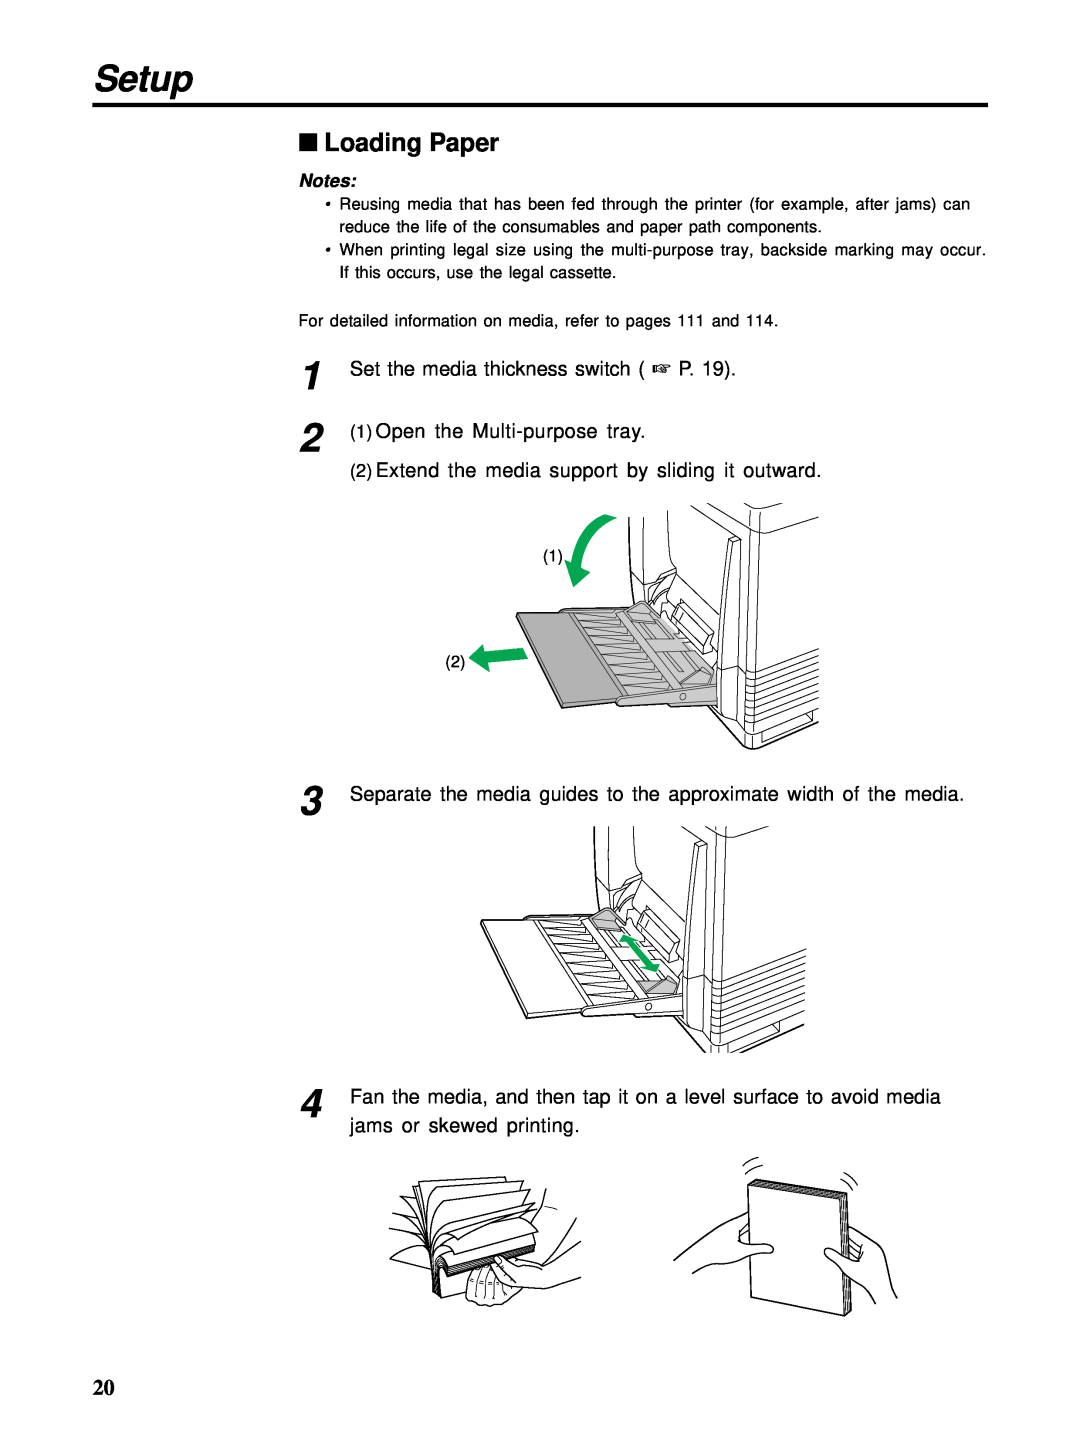 HP Ci 1100 manual Loading Paper, Setup 